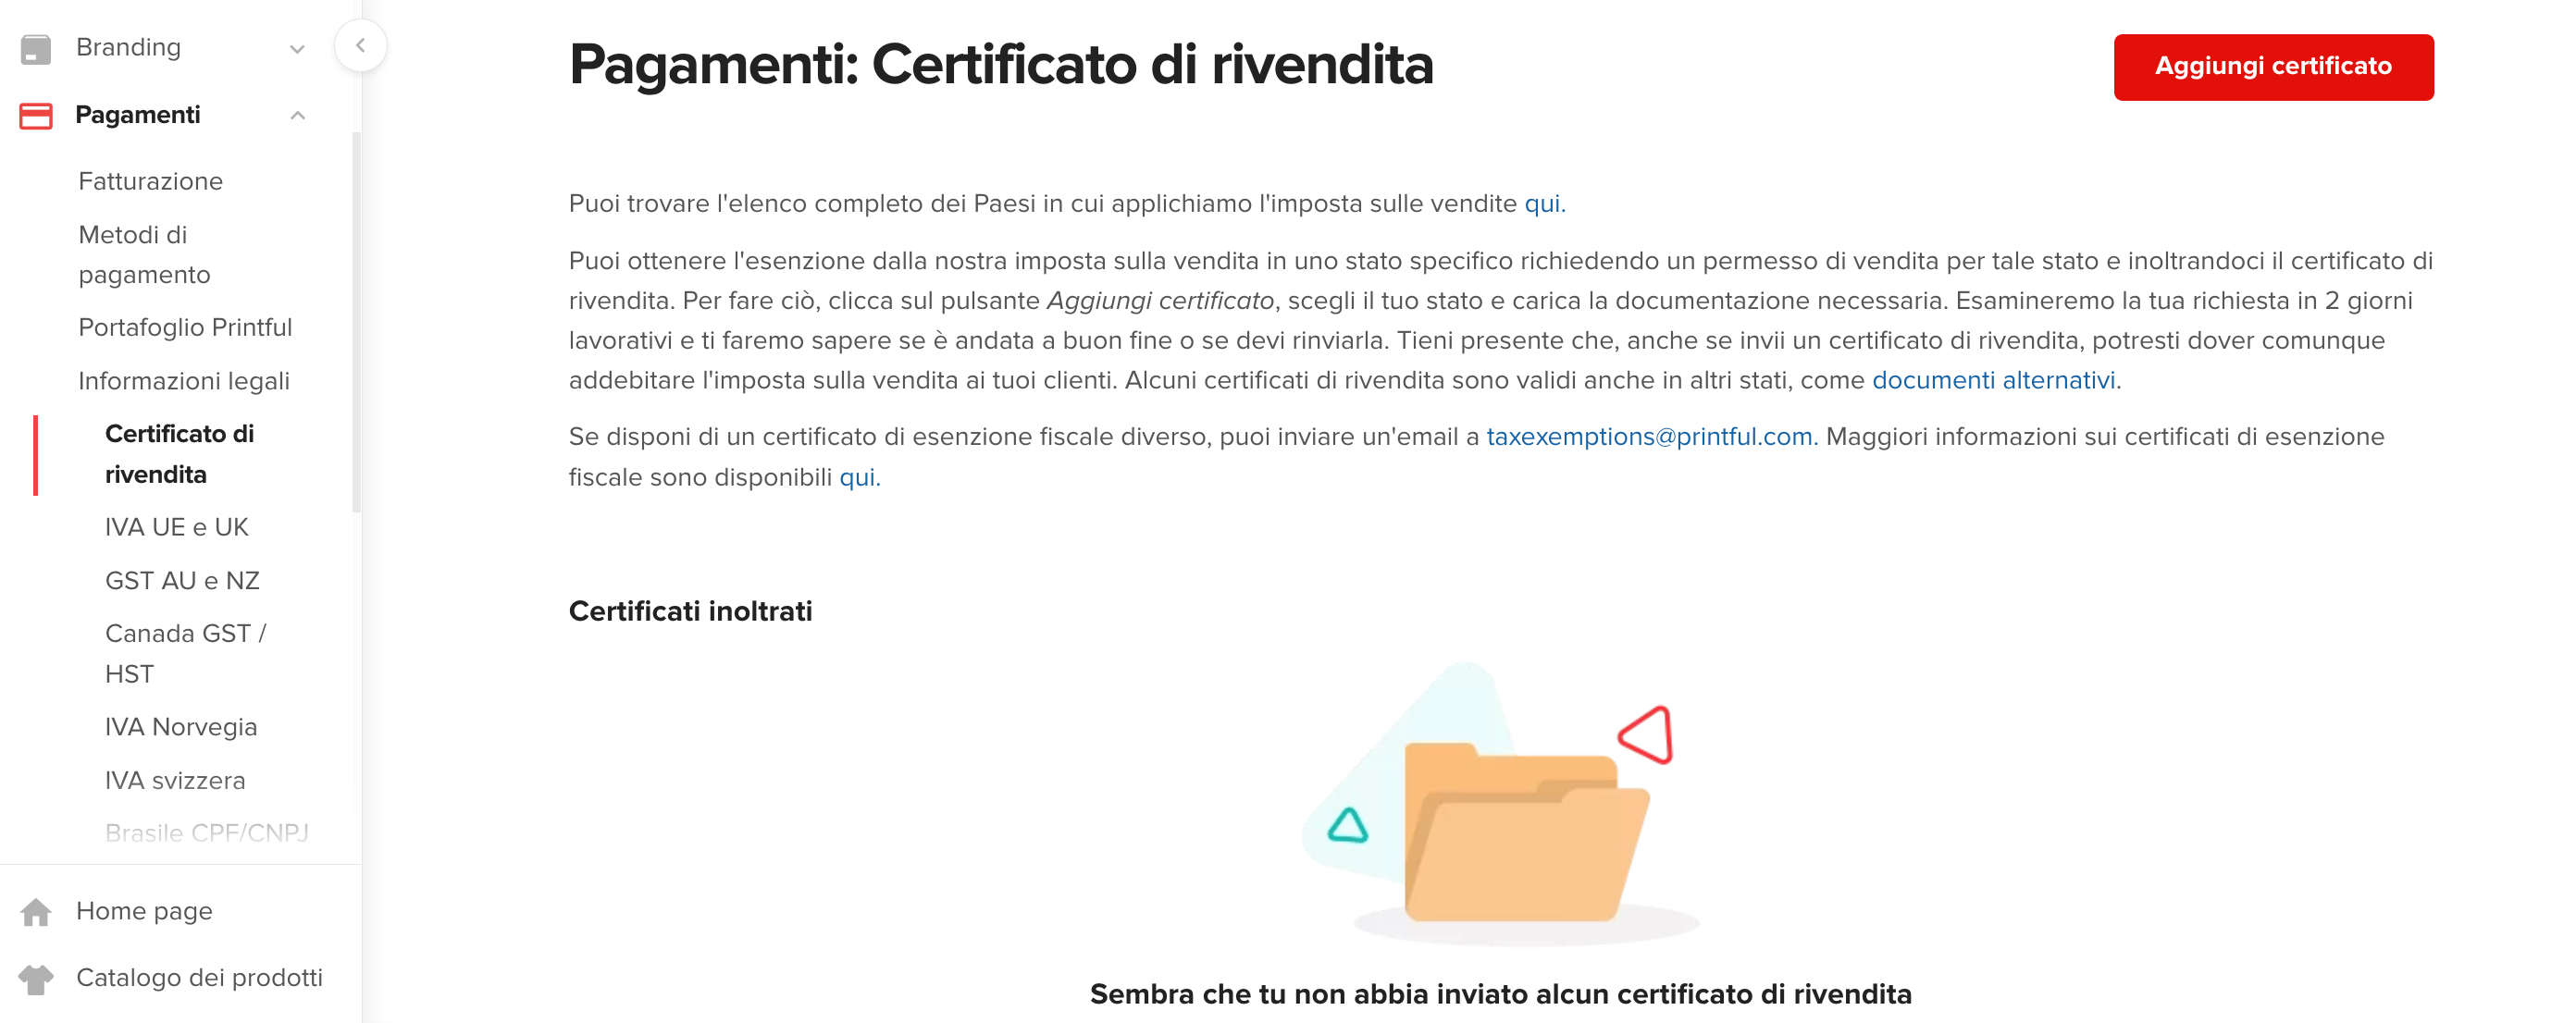 certificato_di_rivendita.png